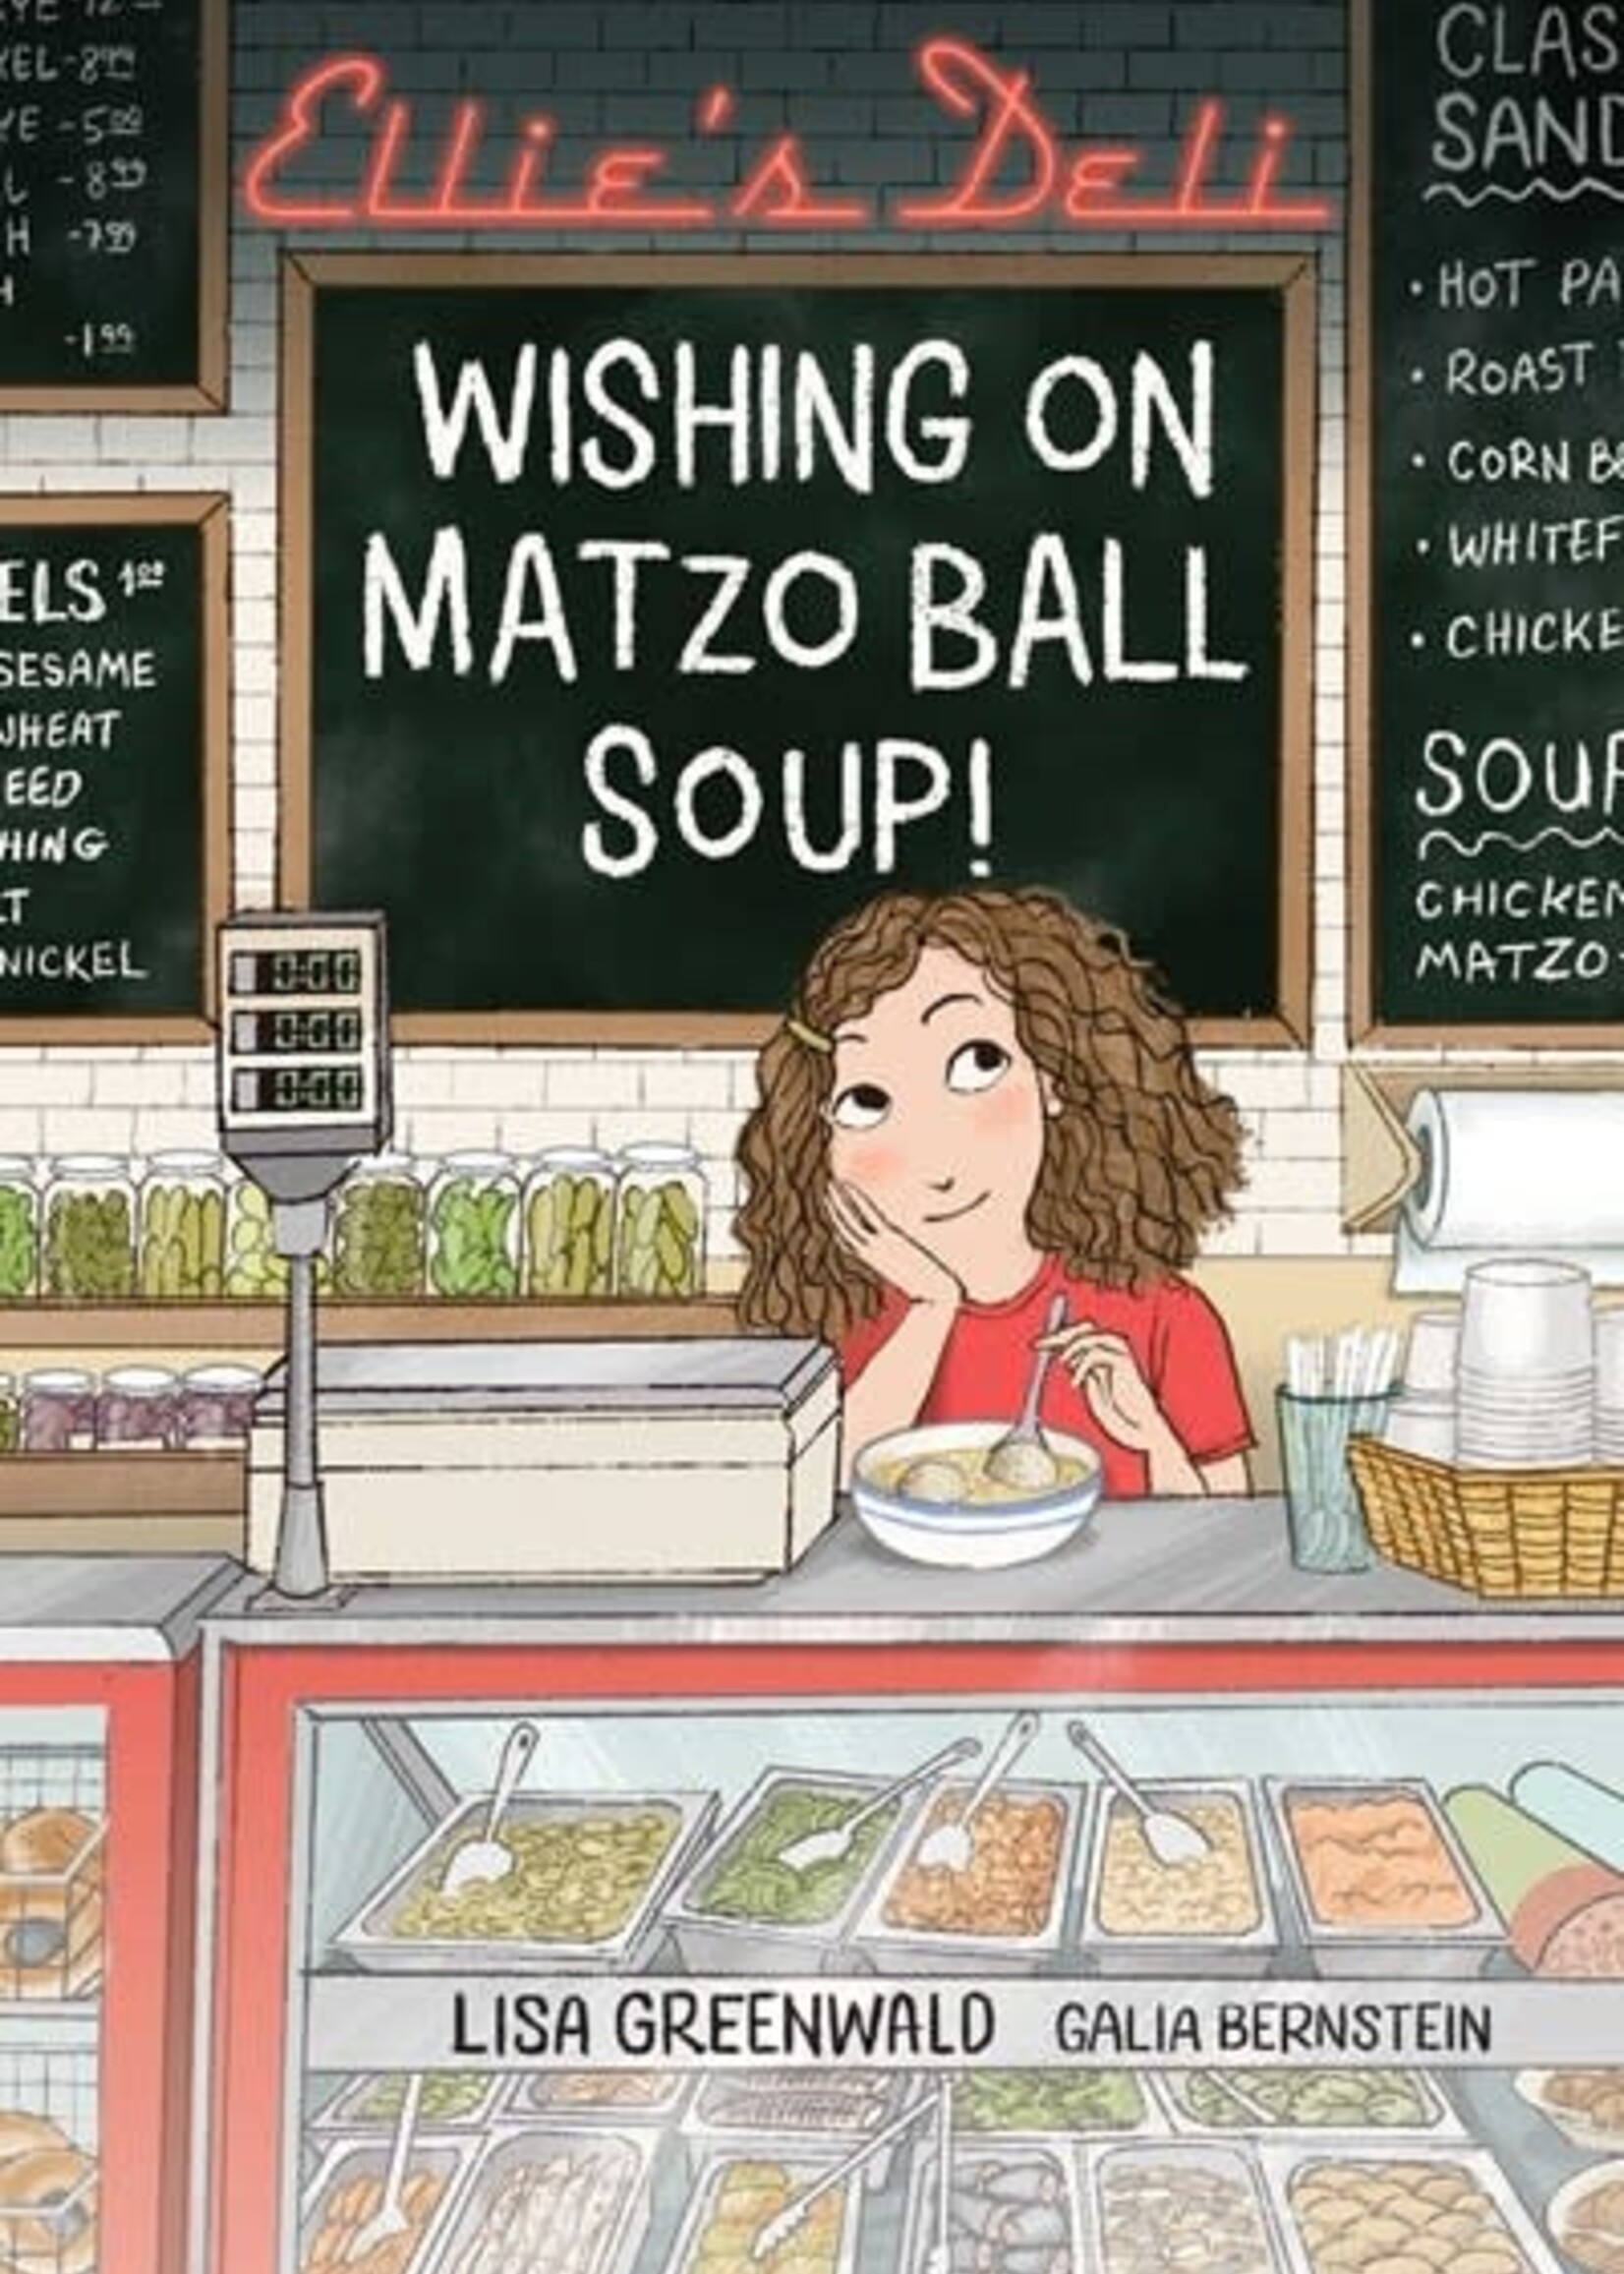 Ellie's Deli 1 Wishing on Matzo Ball Soup